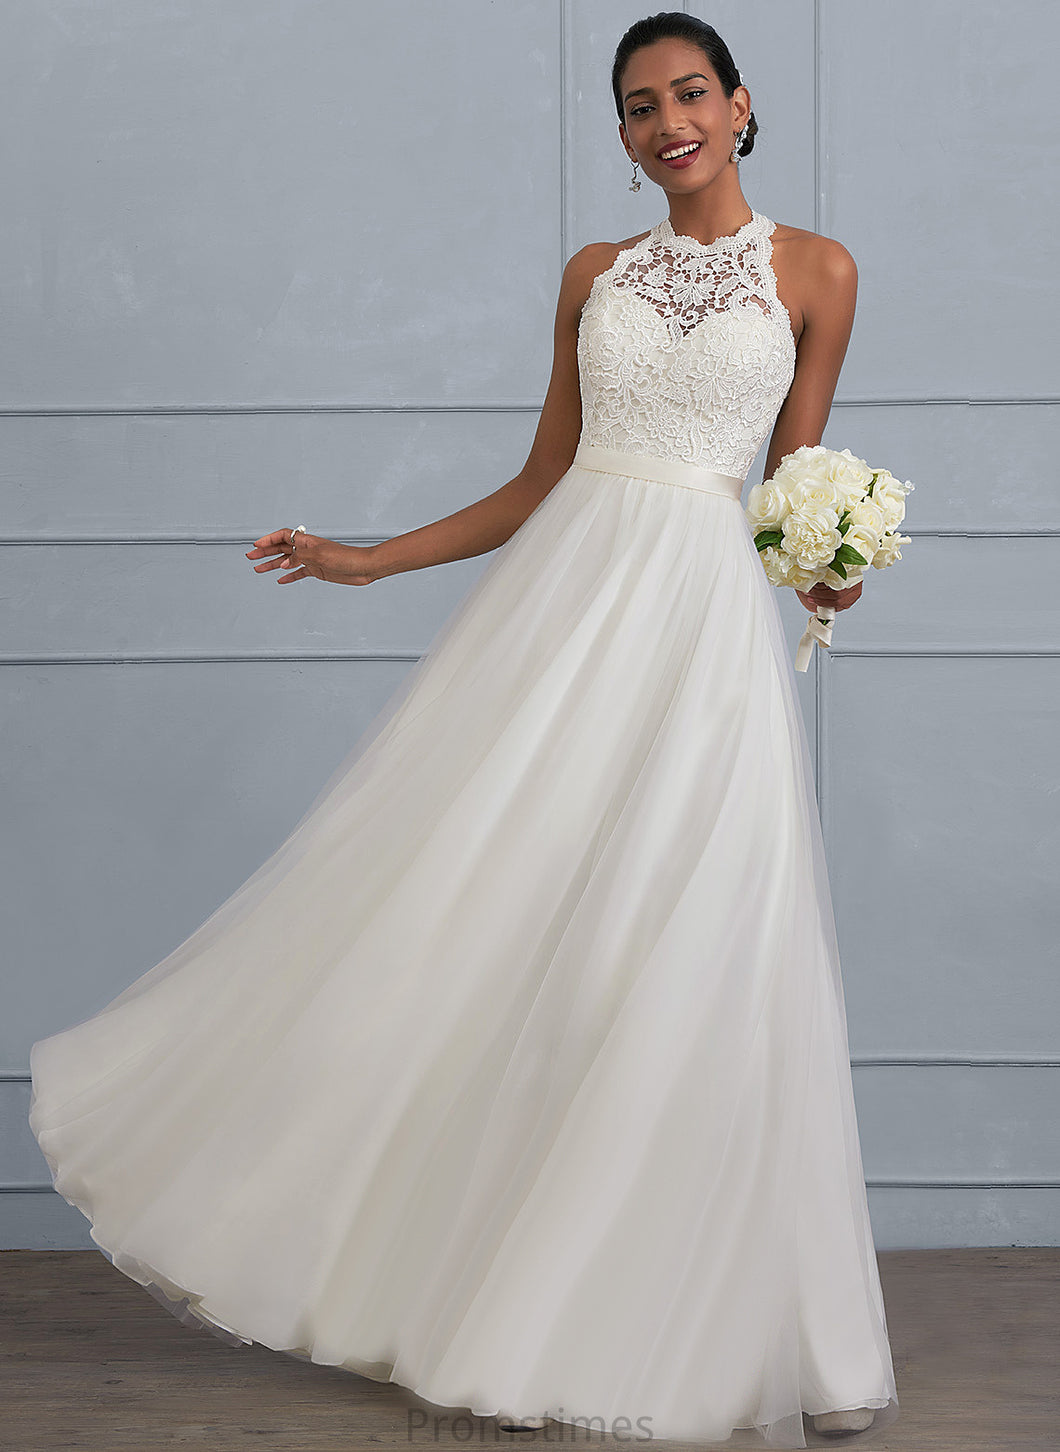 A-Line Rylie Charmeuse Wedding Wedding Dresses Tulle Floor-Length Lace Dress